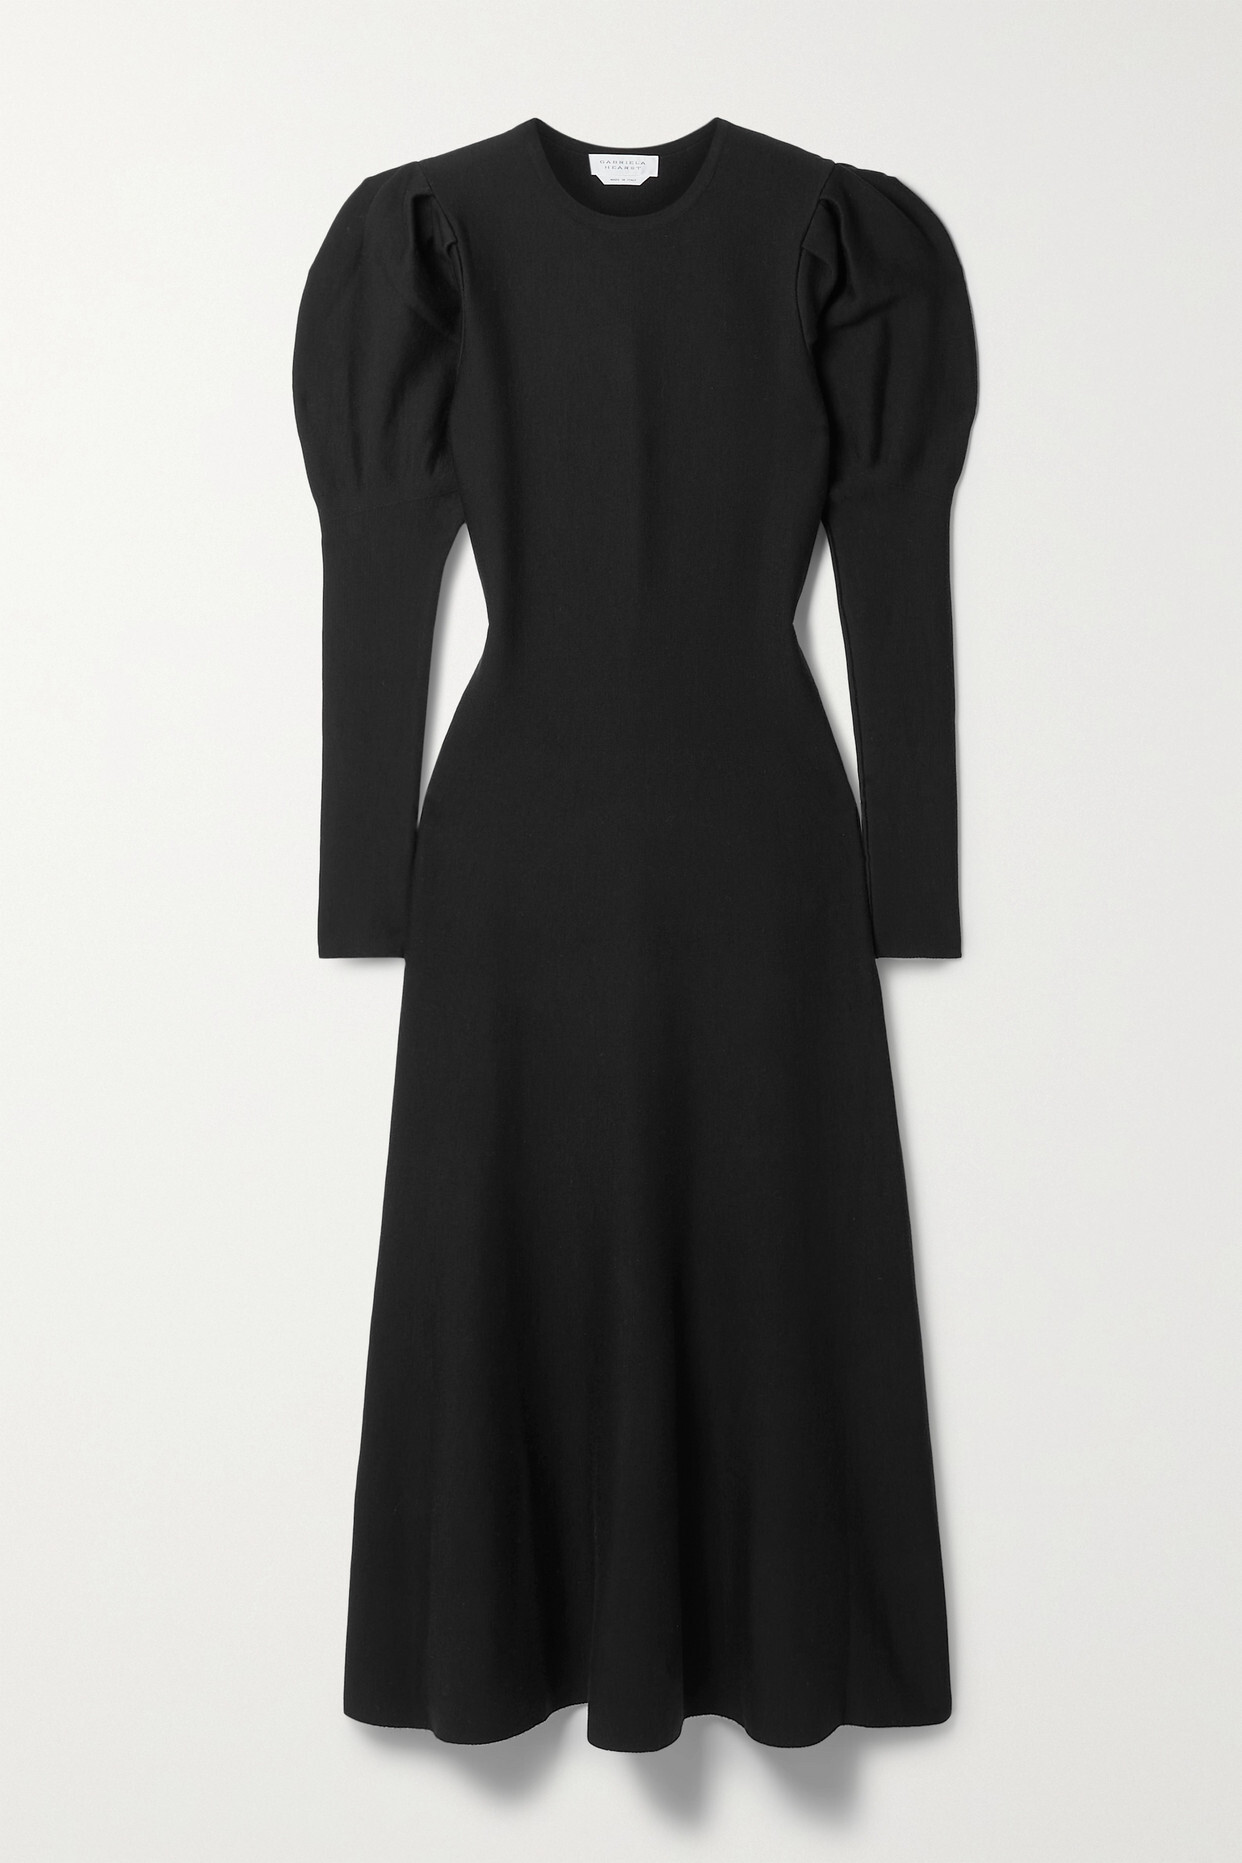 Gabriela Hearst - Hannah Wool And Cashmere-blend Dress - Black